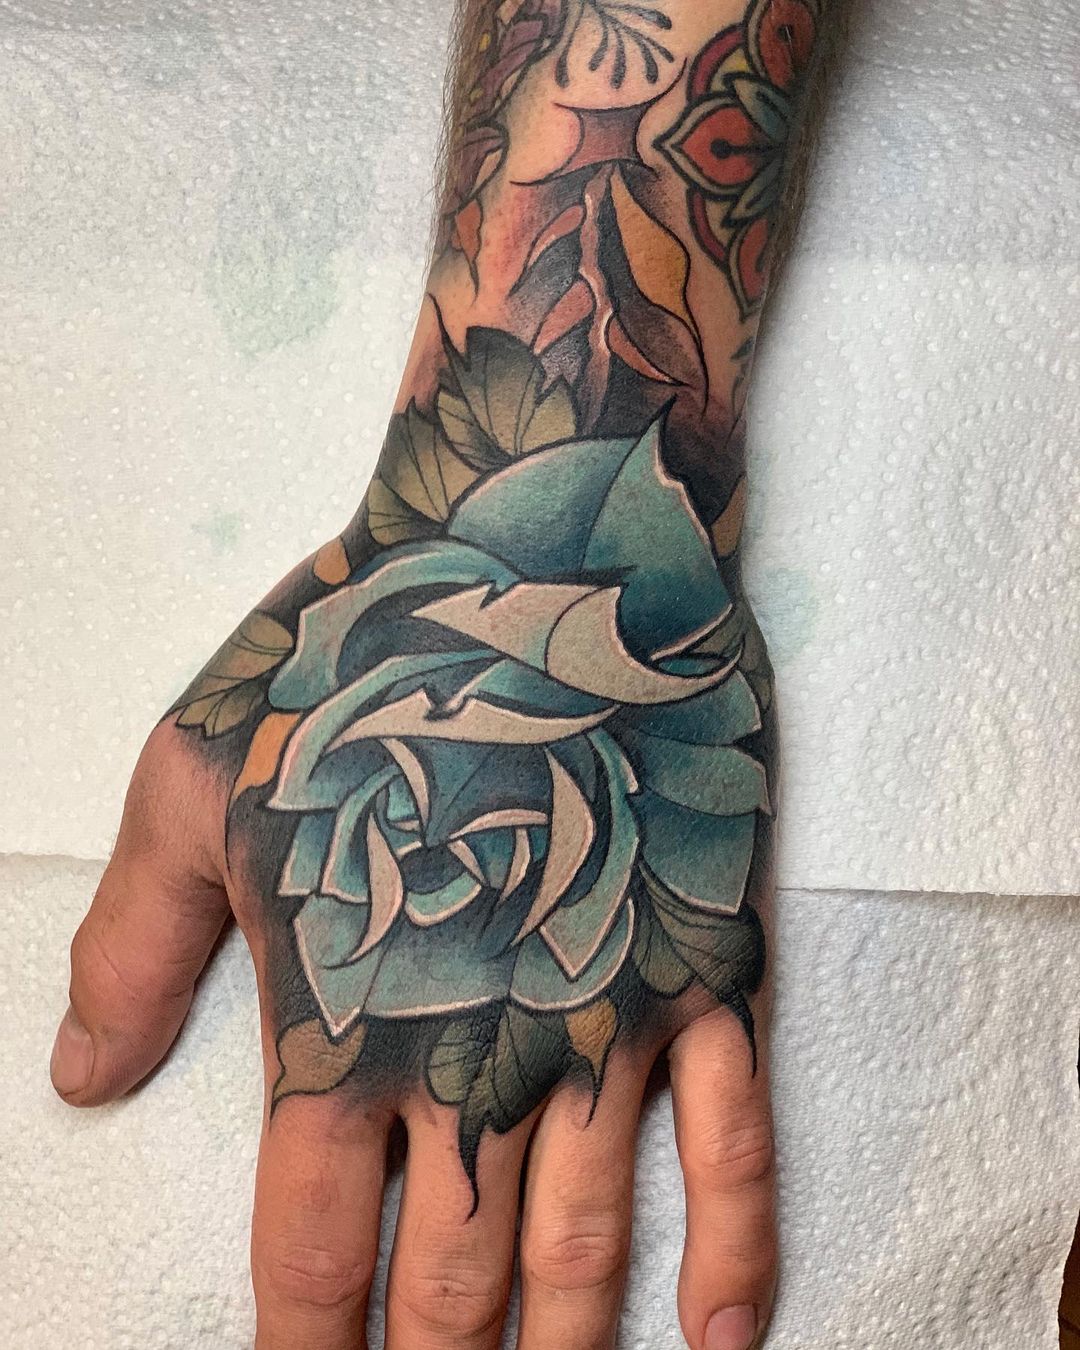 blue rose tattoo